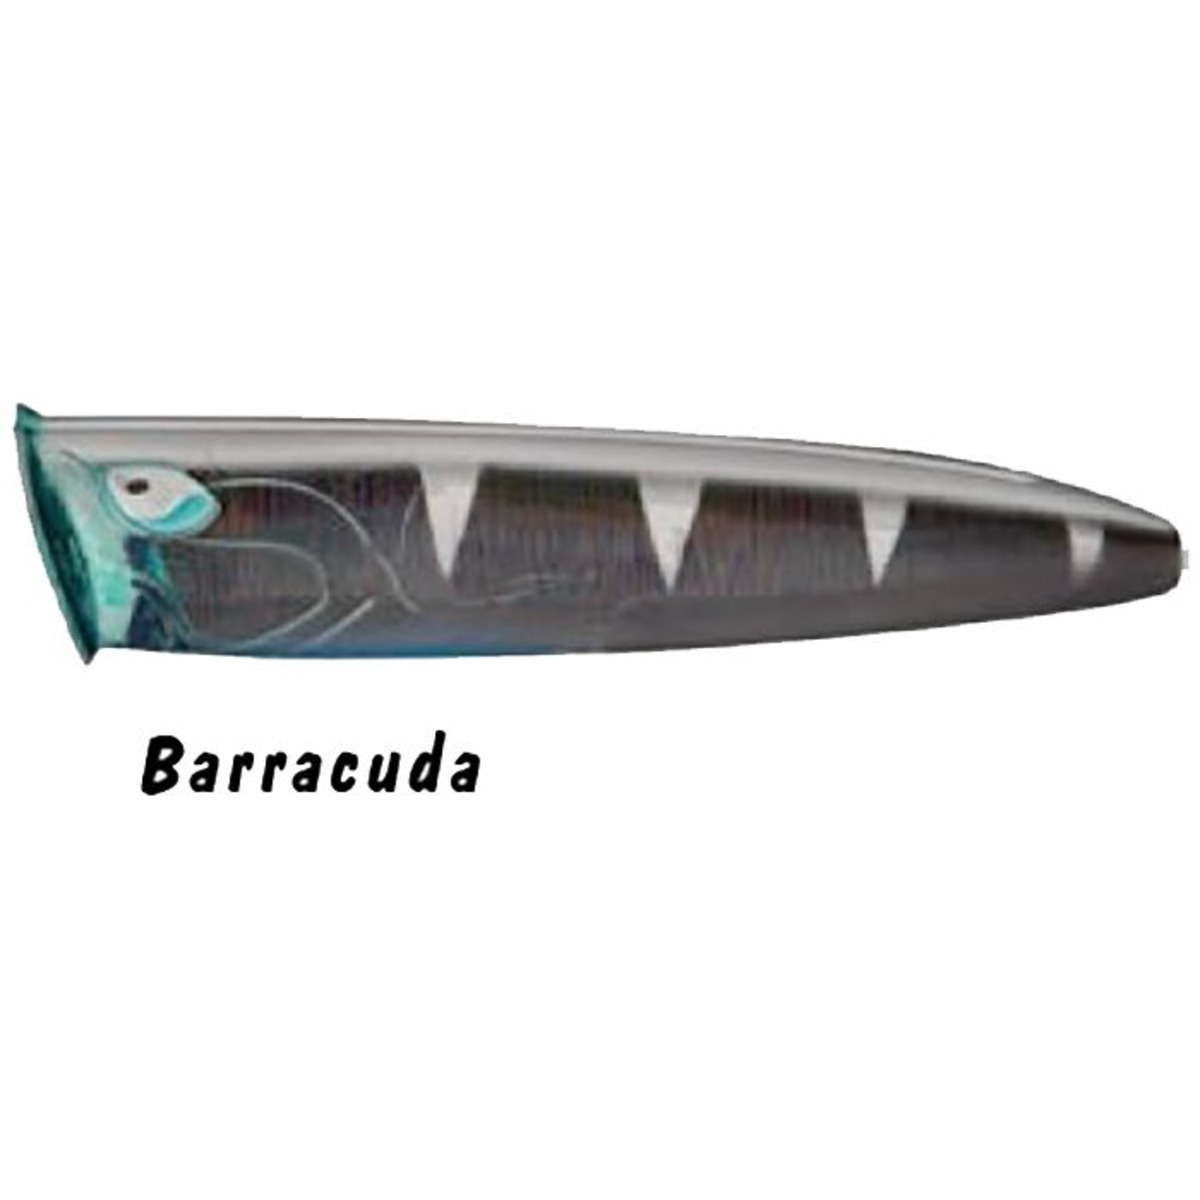 Herakles Hi-Pop 145 - 58 g - 145 mm - Barrcuda